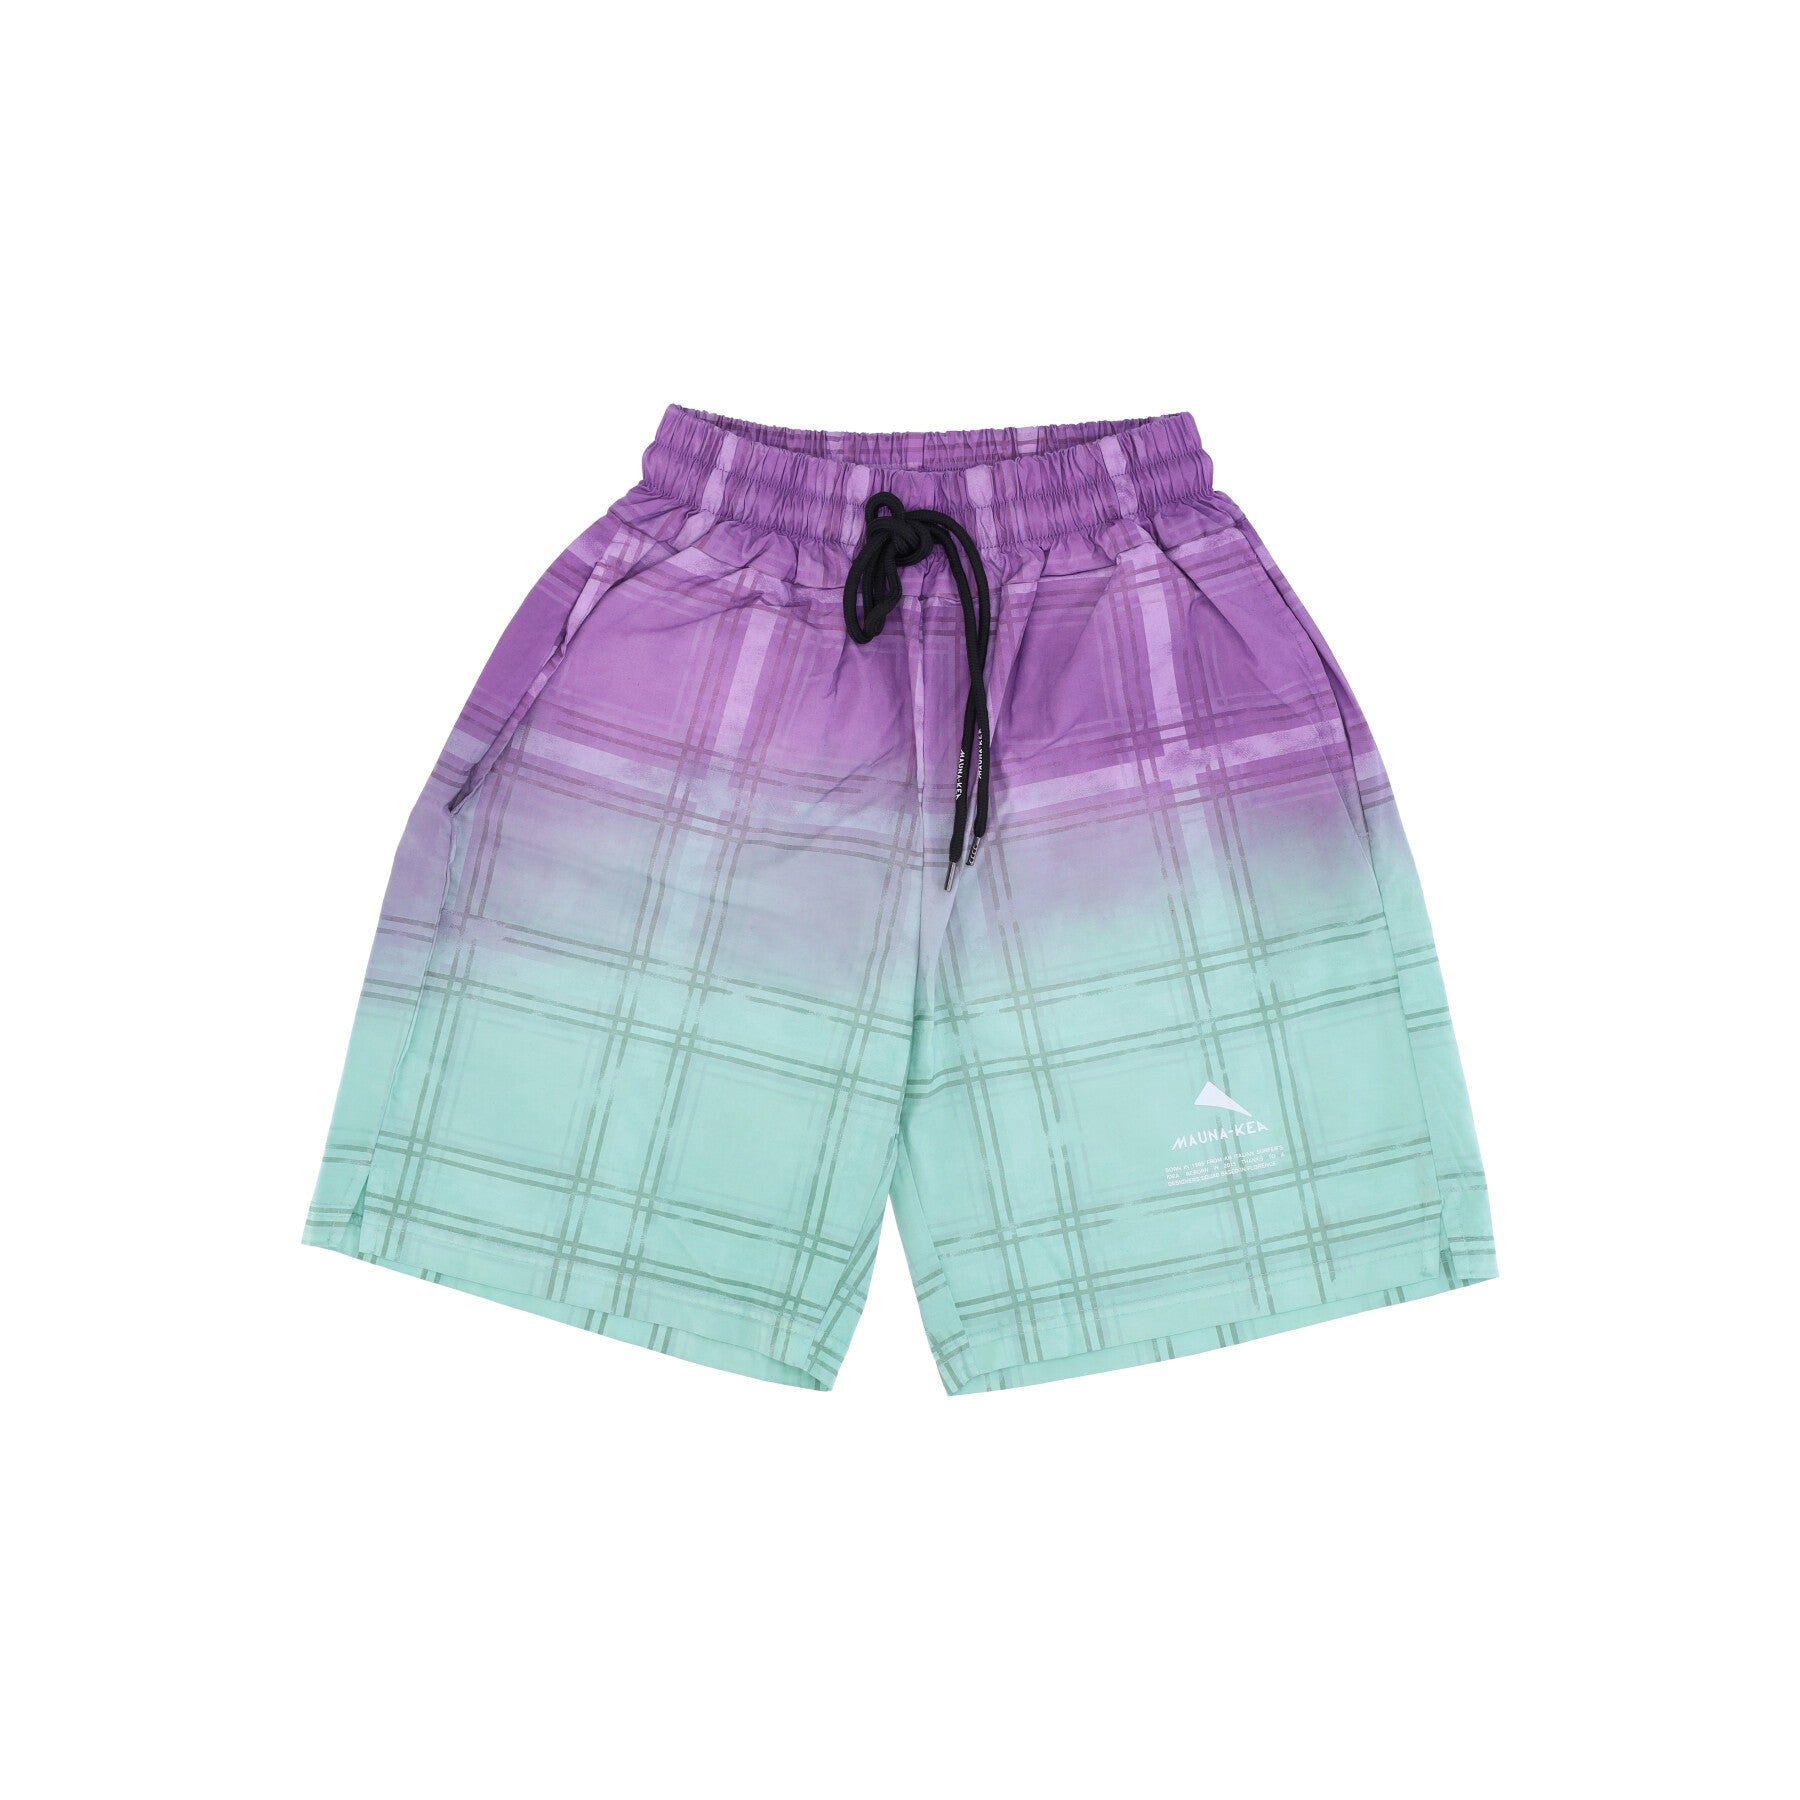 Checked Degrade' Shorts Men's Shorts Purple/green